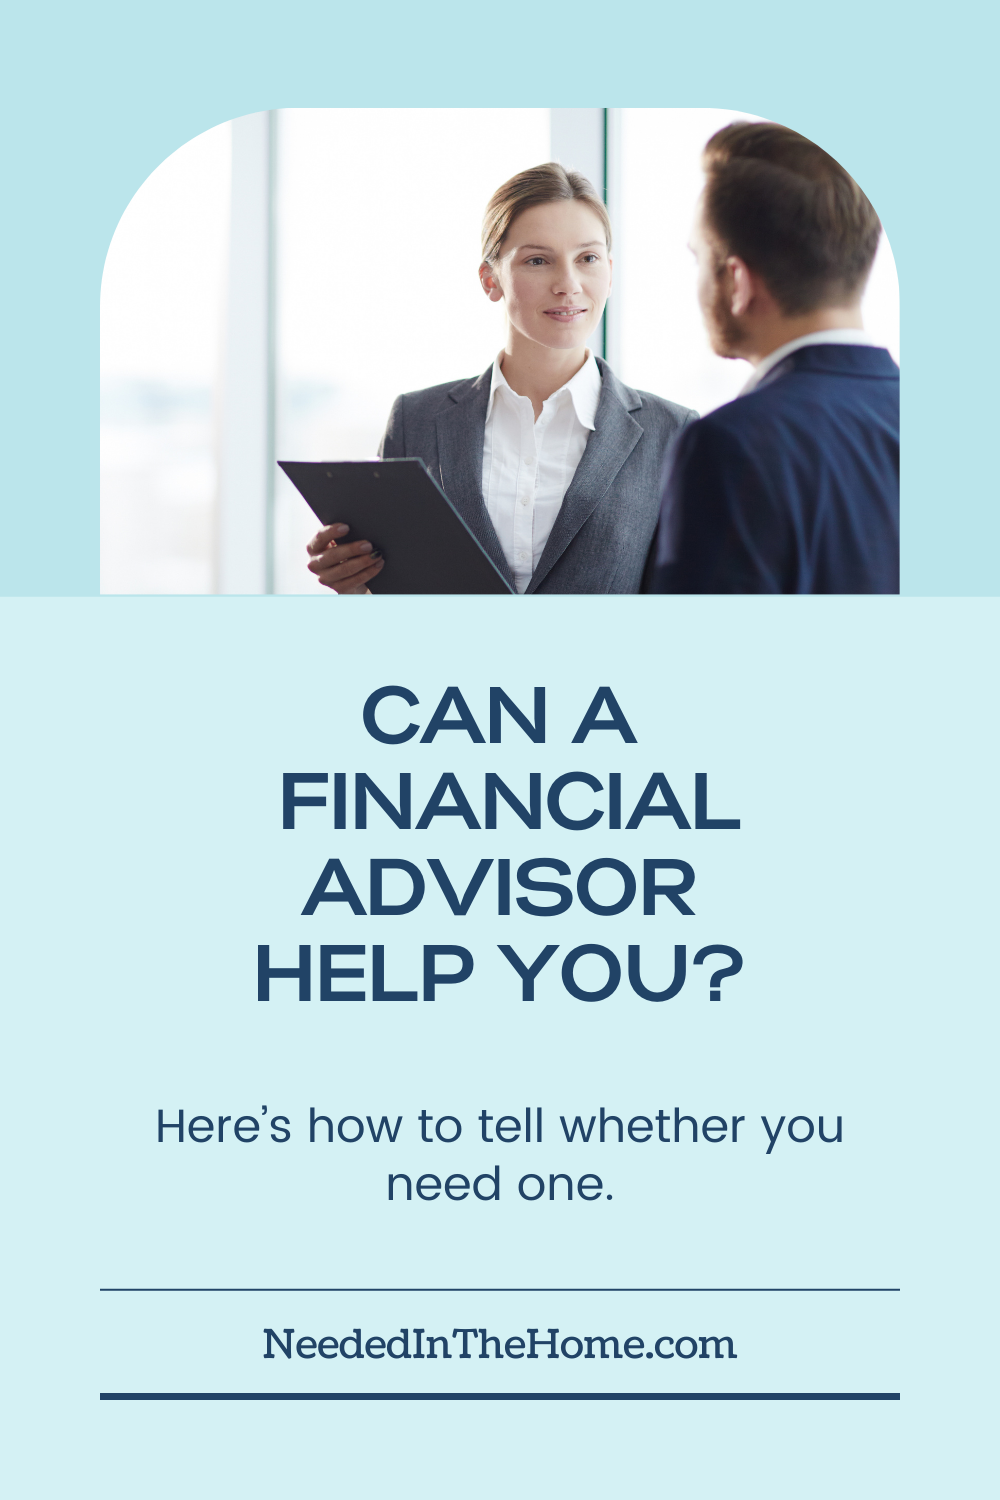 pinterest-pin-description can a financial advisor help you woman money advice man suits personal finances neededinthehome